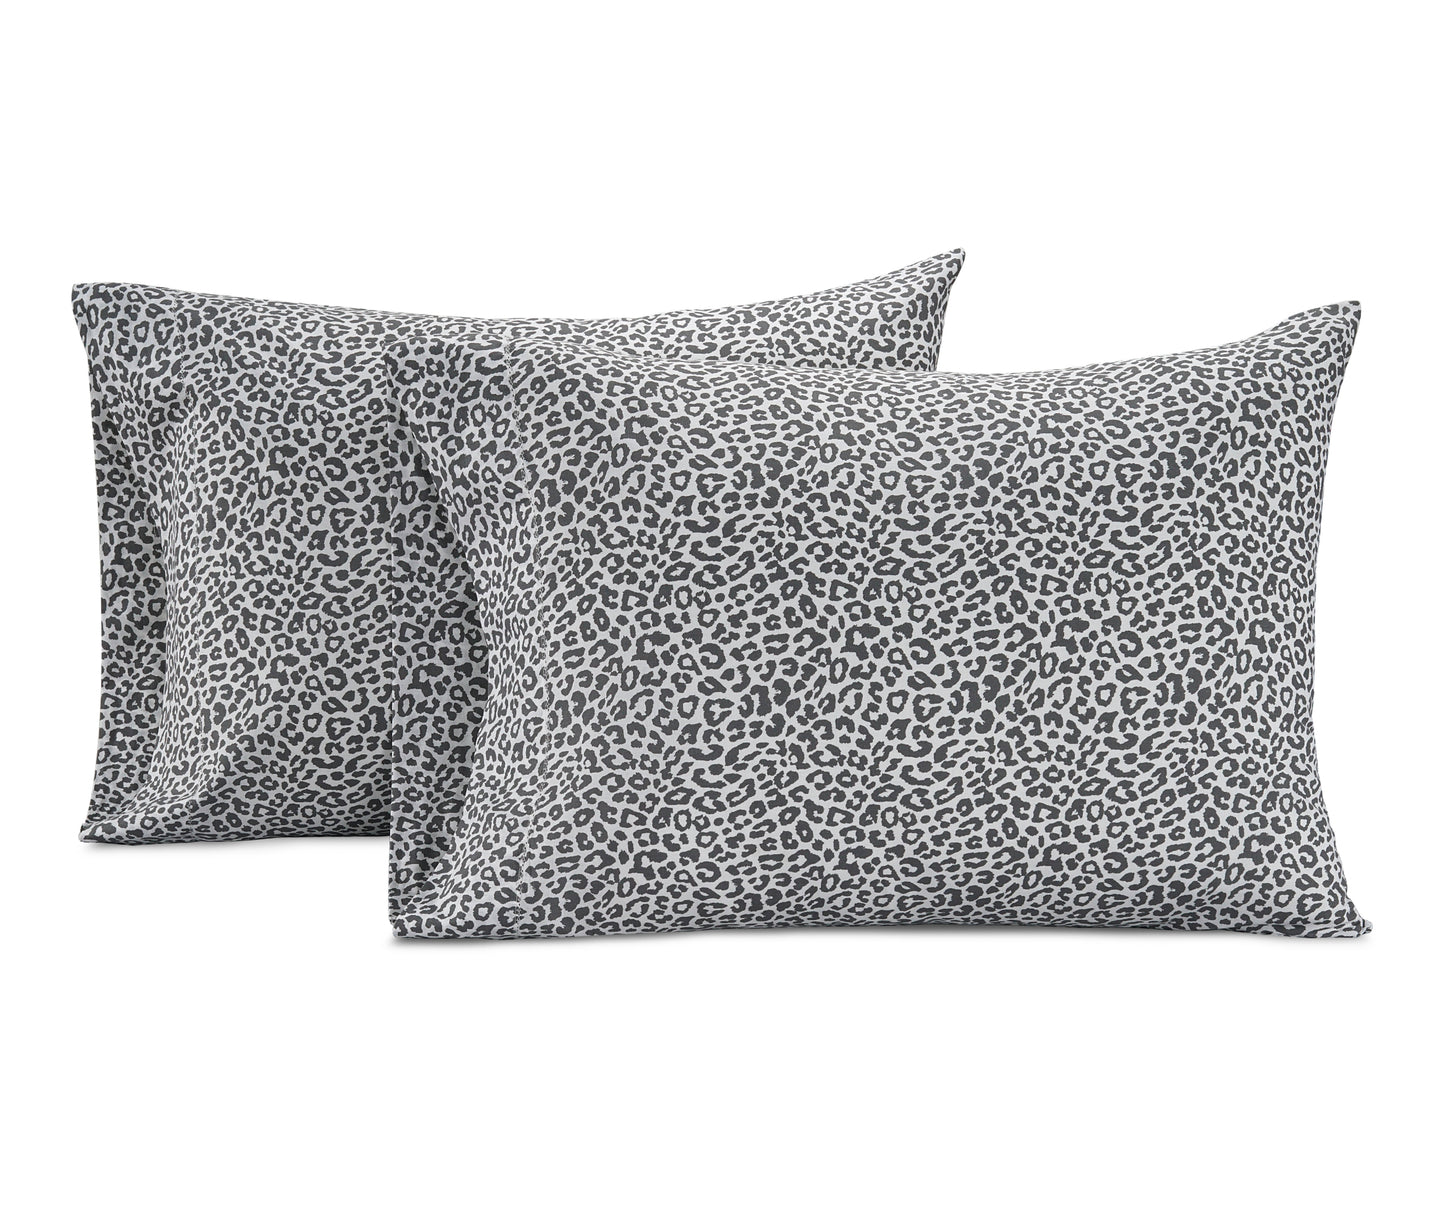 100% Organic Washed Cotton Sheet Set - Cheetah Charcoal